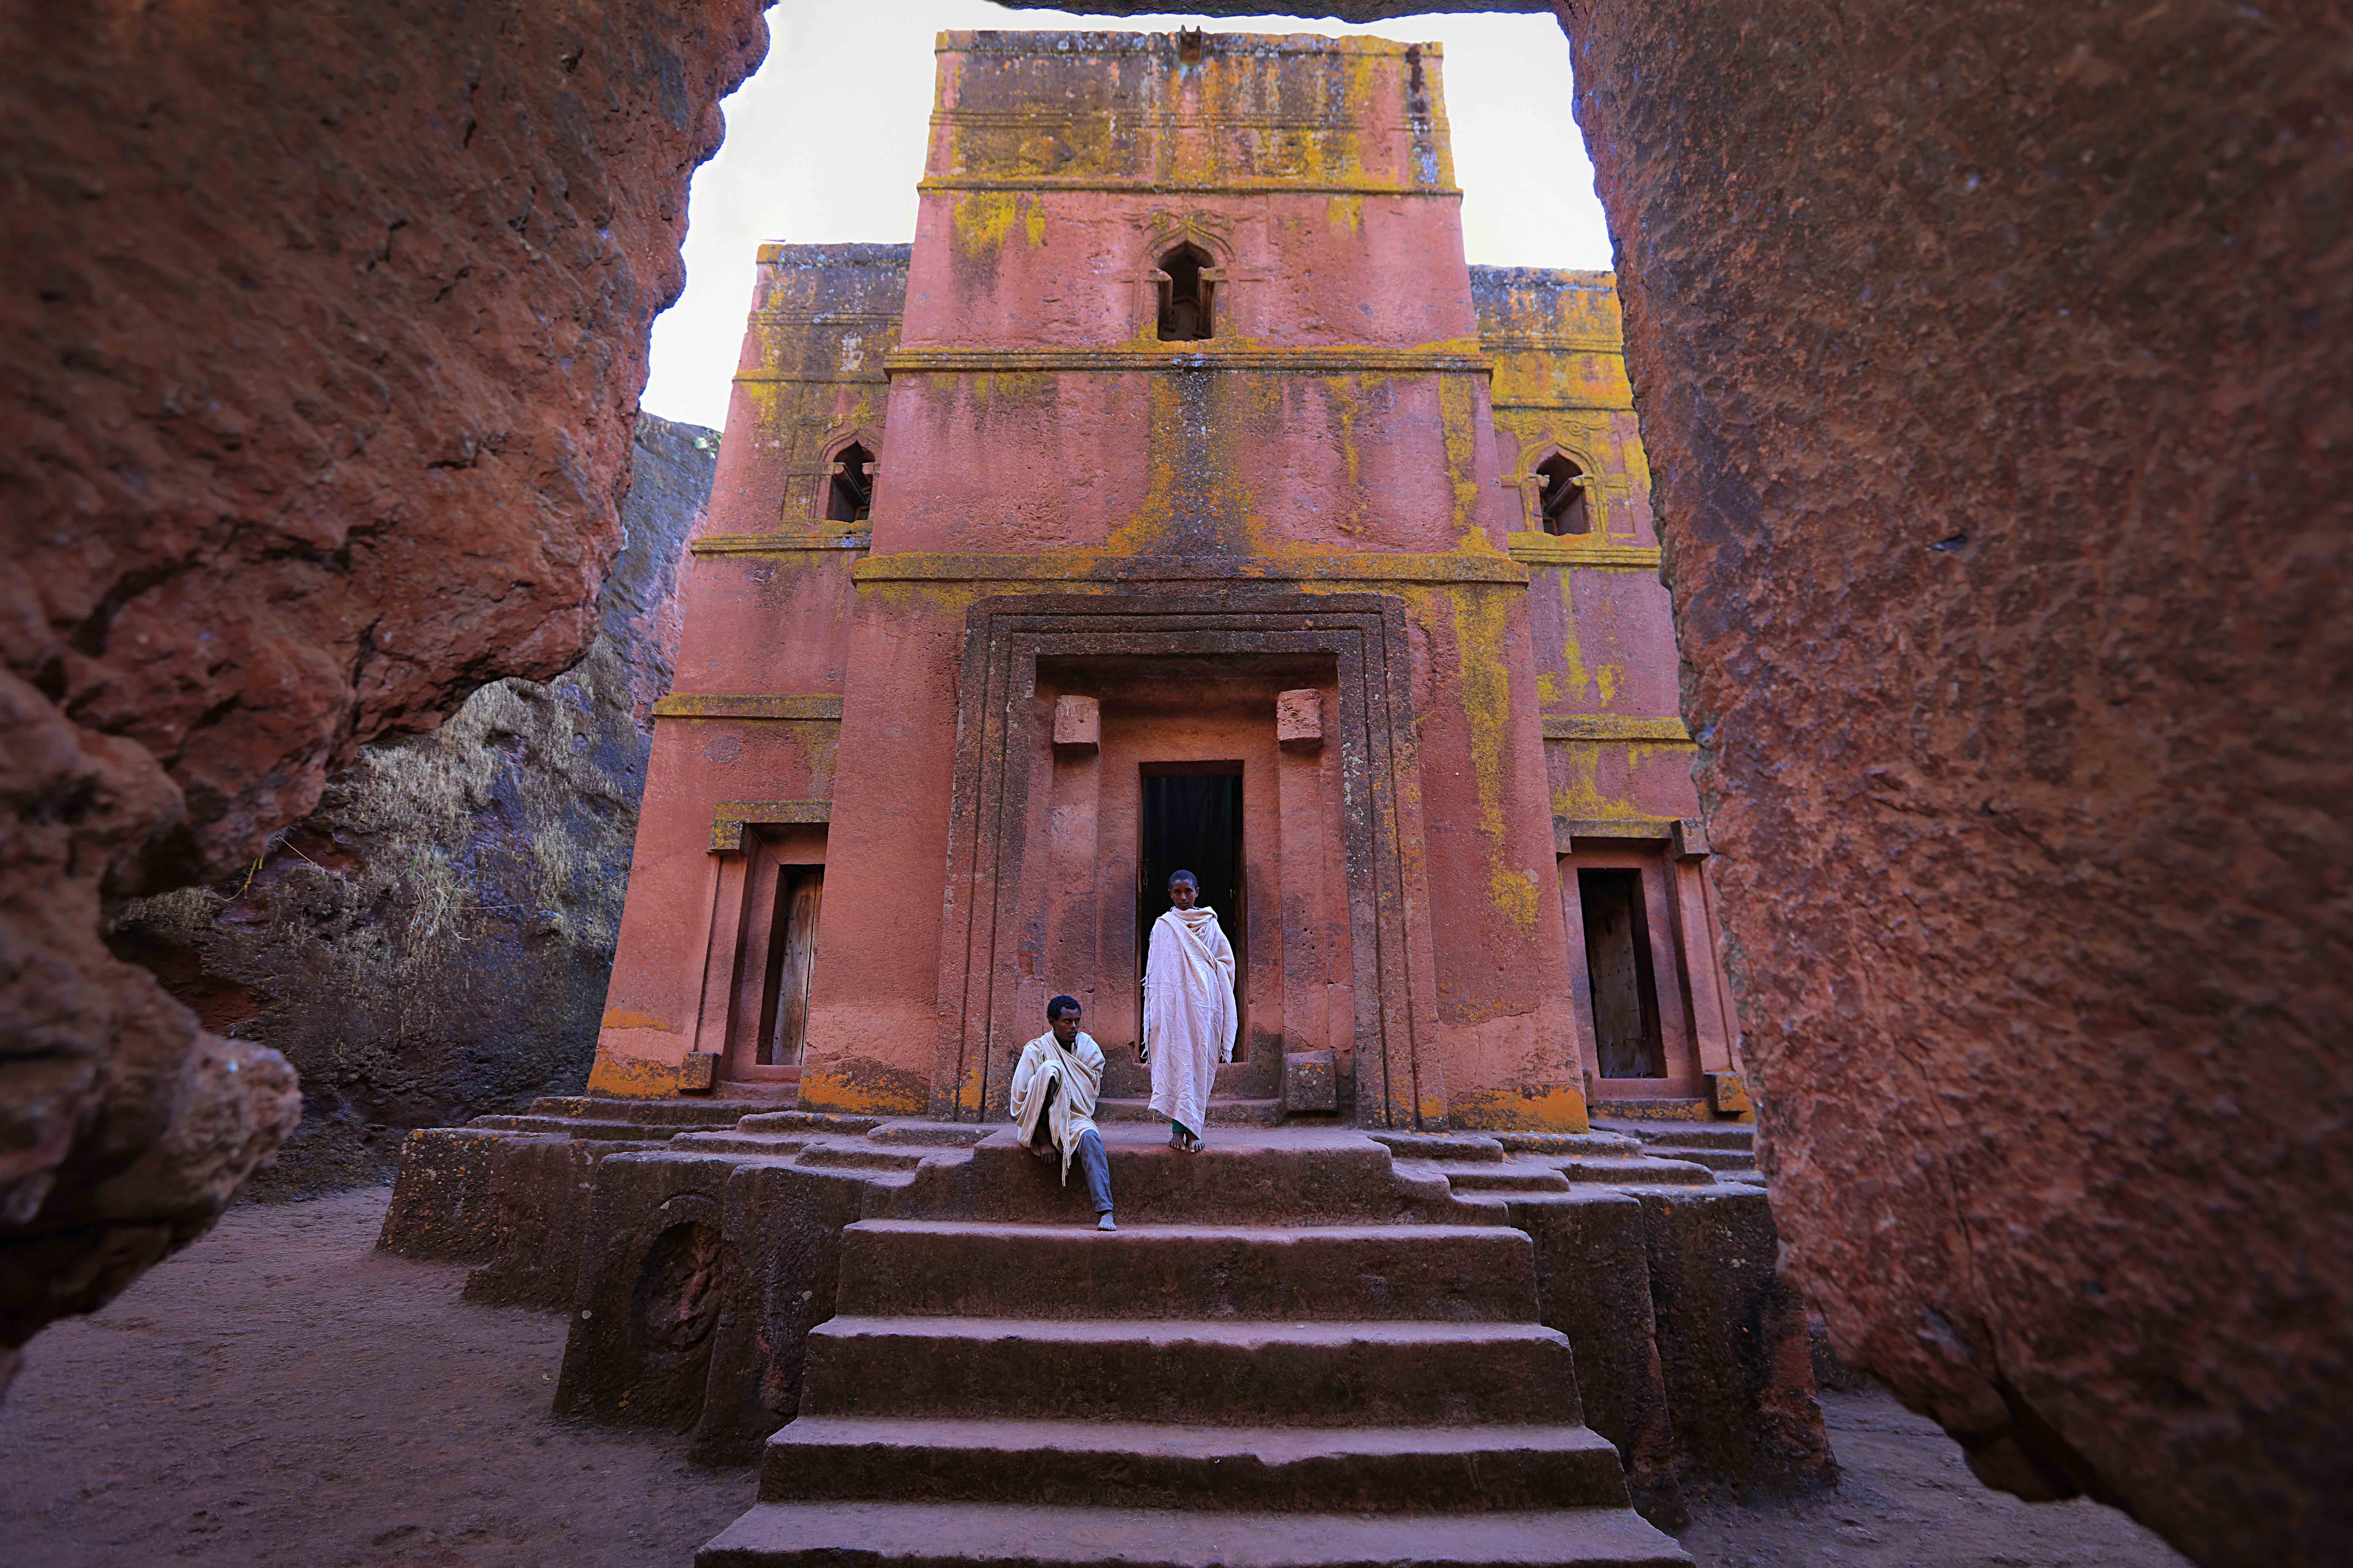 Arkhênum brings its heritage expertise to Ethiopia